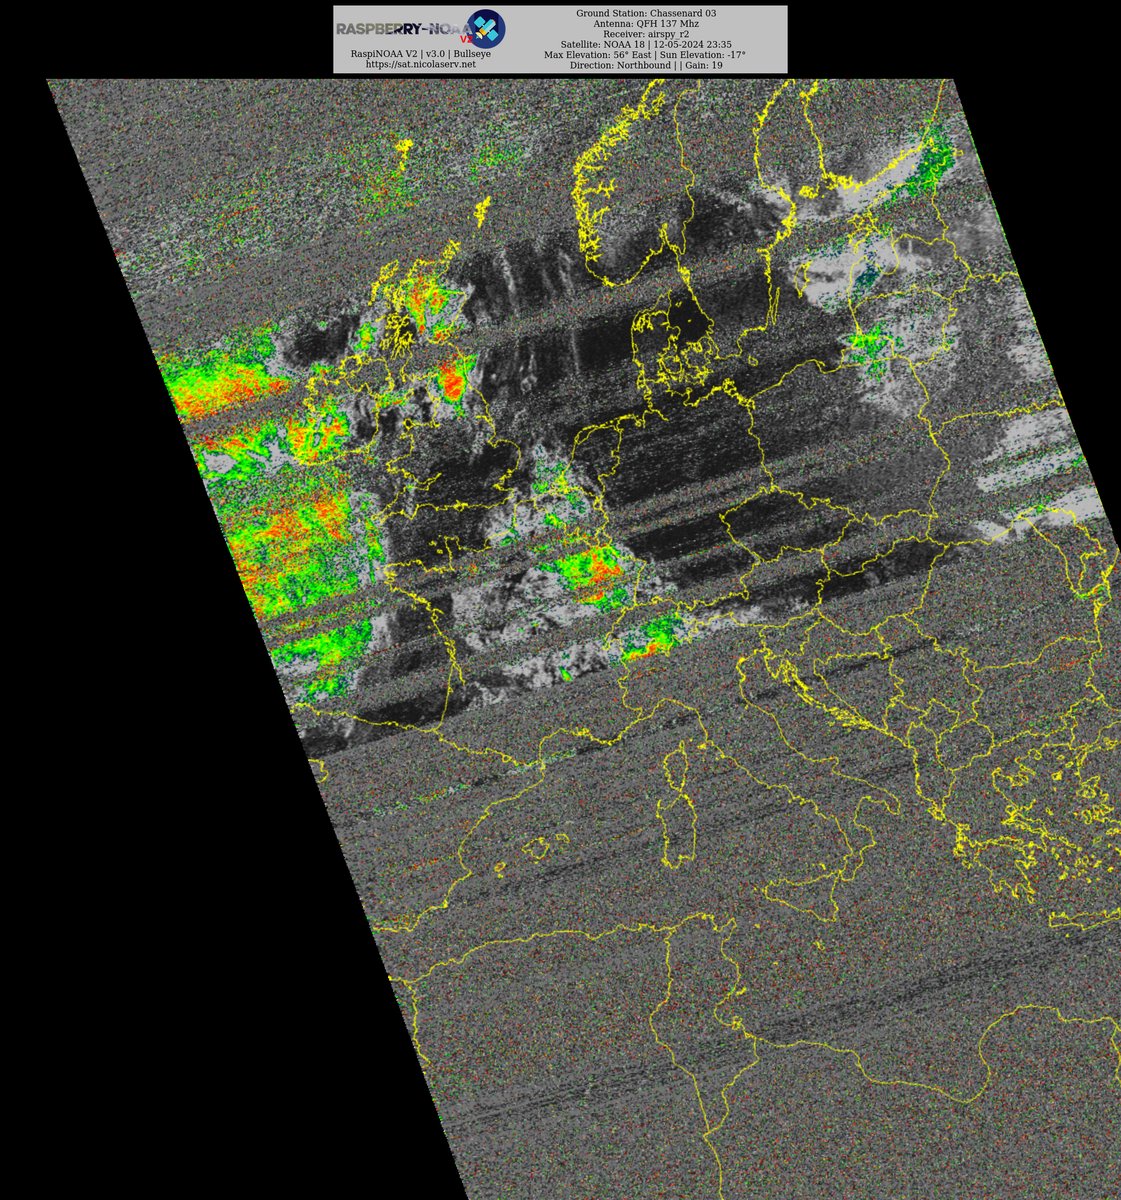 Ground Station: Chassenard 03 NOAA 18 12-05-2024 23:11 CEST  Max Elev: 56° E Sun Elevation: -17° Gain: 19 | Northbound

#NOAA #NOAA15 #NOAA18 #NOAA19 #MeteorM2_3 #MeteorM2_4 #weather #weathersats #APT #LRPT #wxtoimg #MeteorDemod #rtlsdr #gpredict #raspberrypi #RN2 #ISS